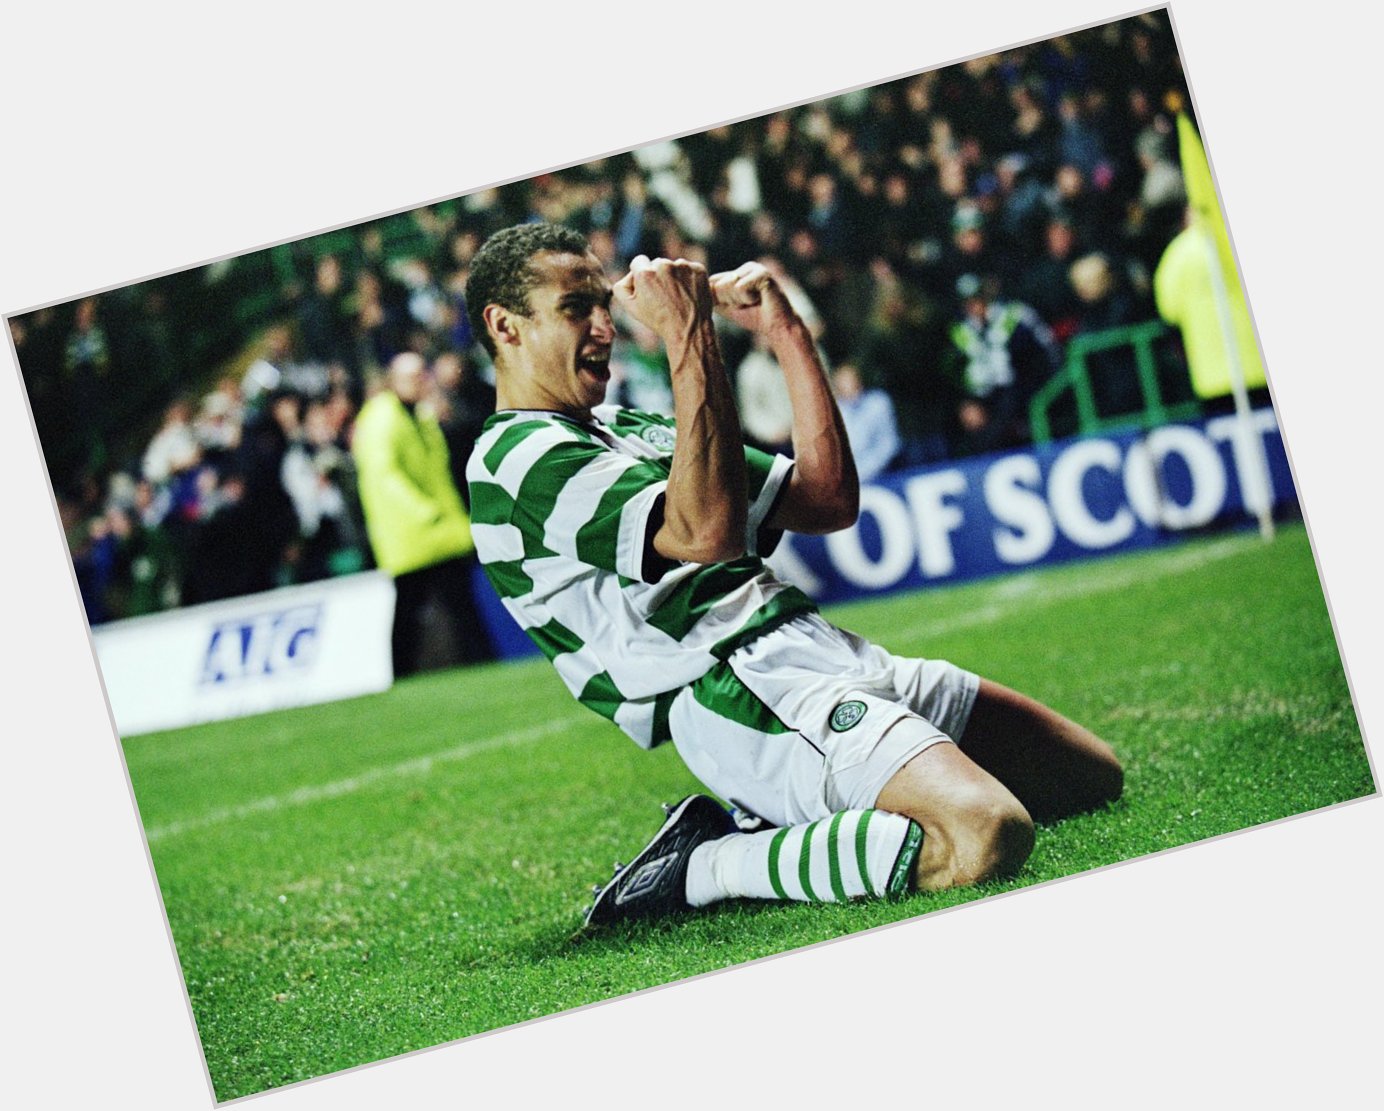   2 4 3  Happy birthday, Celtic legend Henrik Larsson! 7   